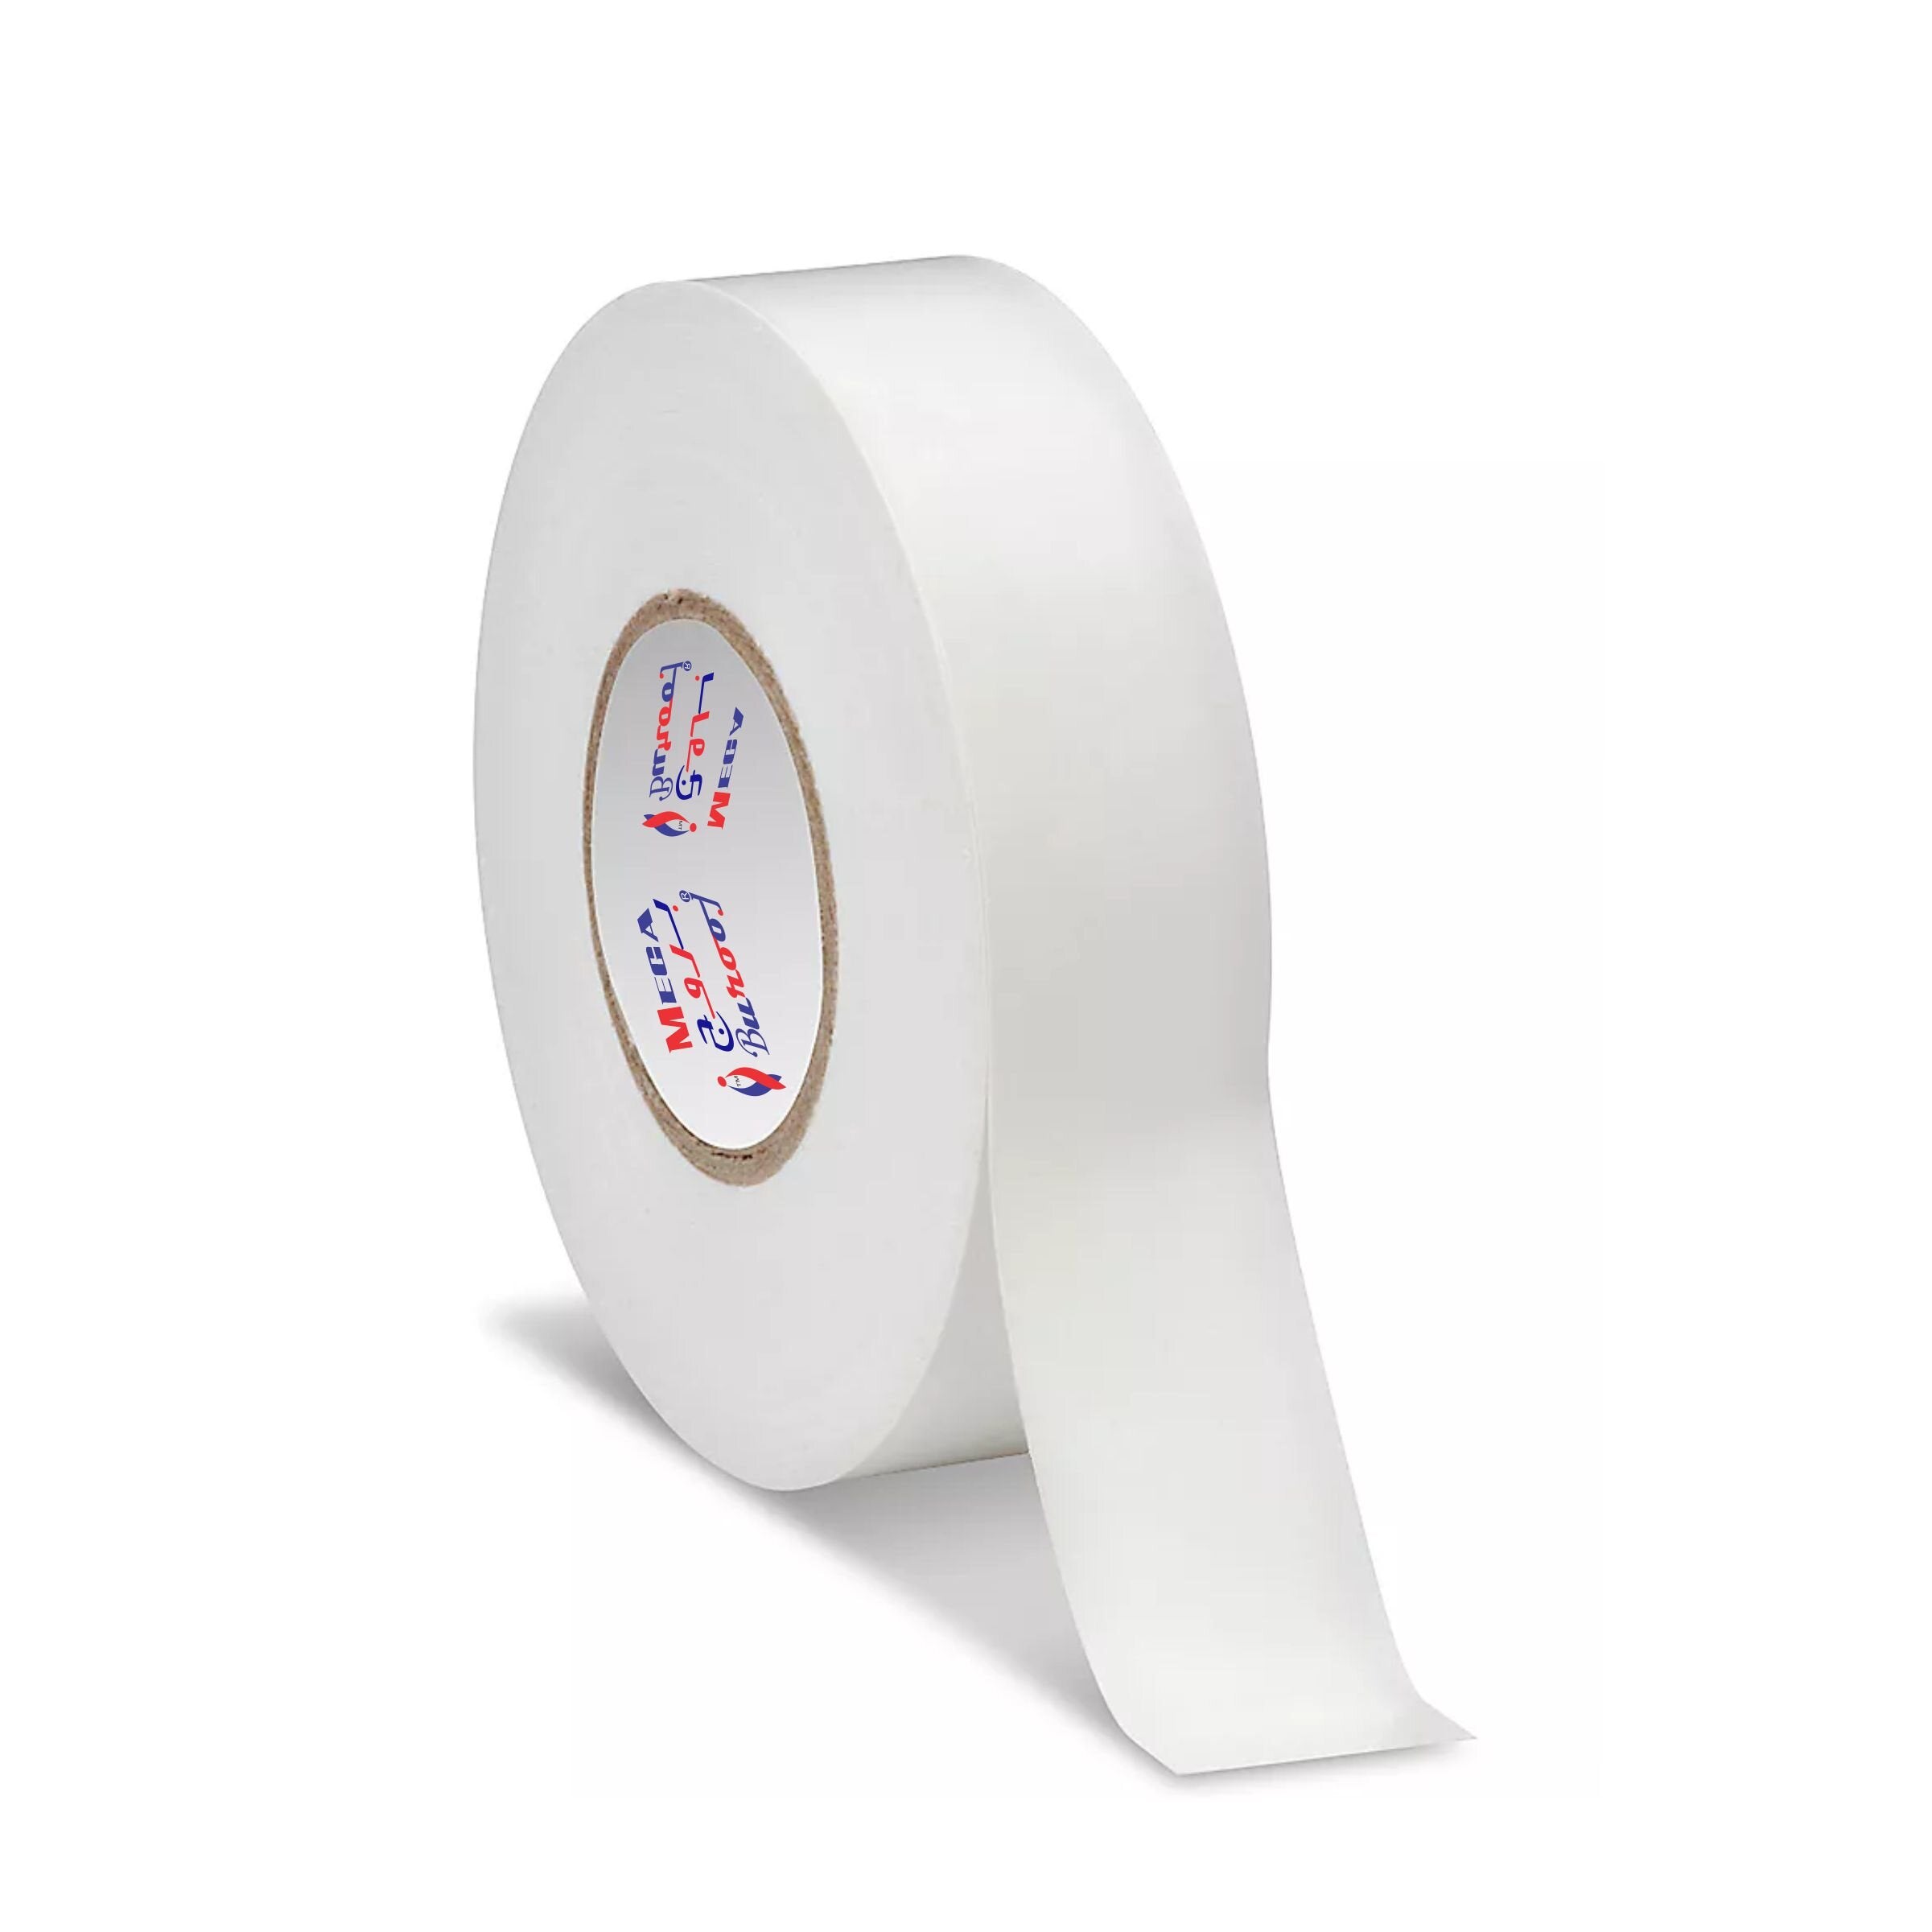 Burooj PVC Electric Insulation Tape